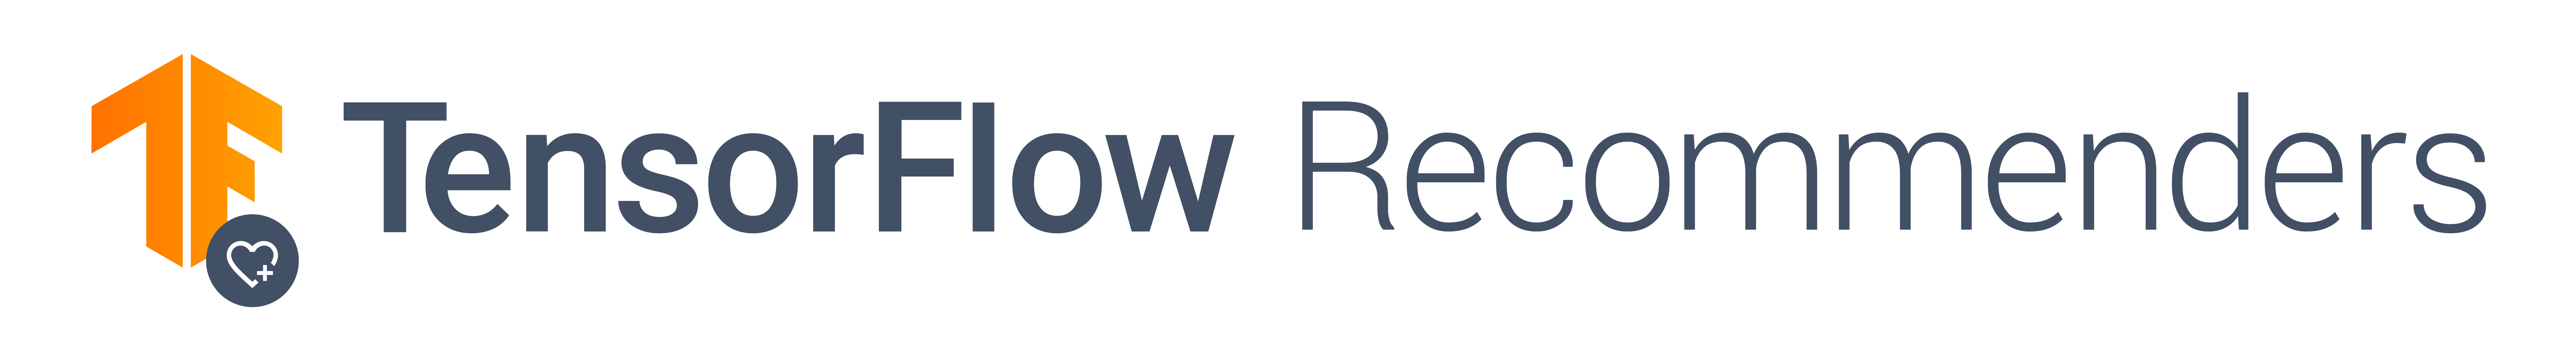 TensorFlow Recommenders logo